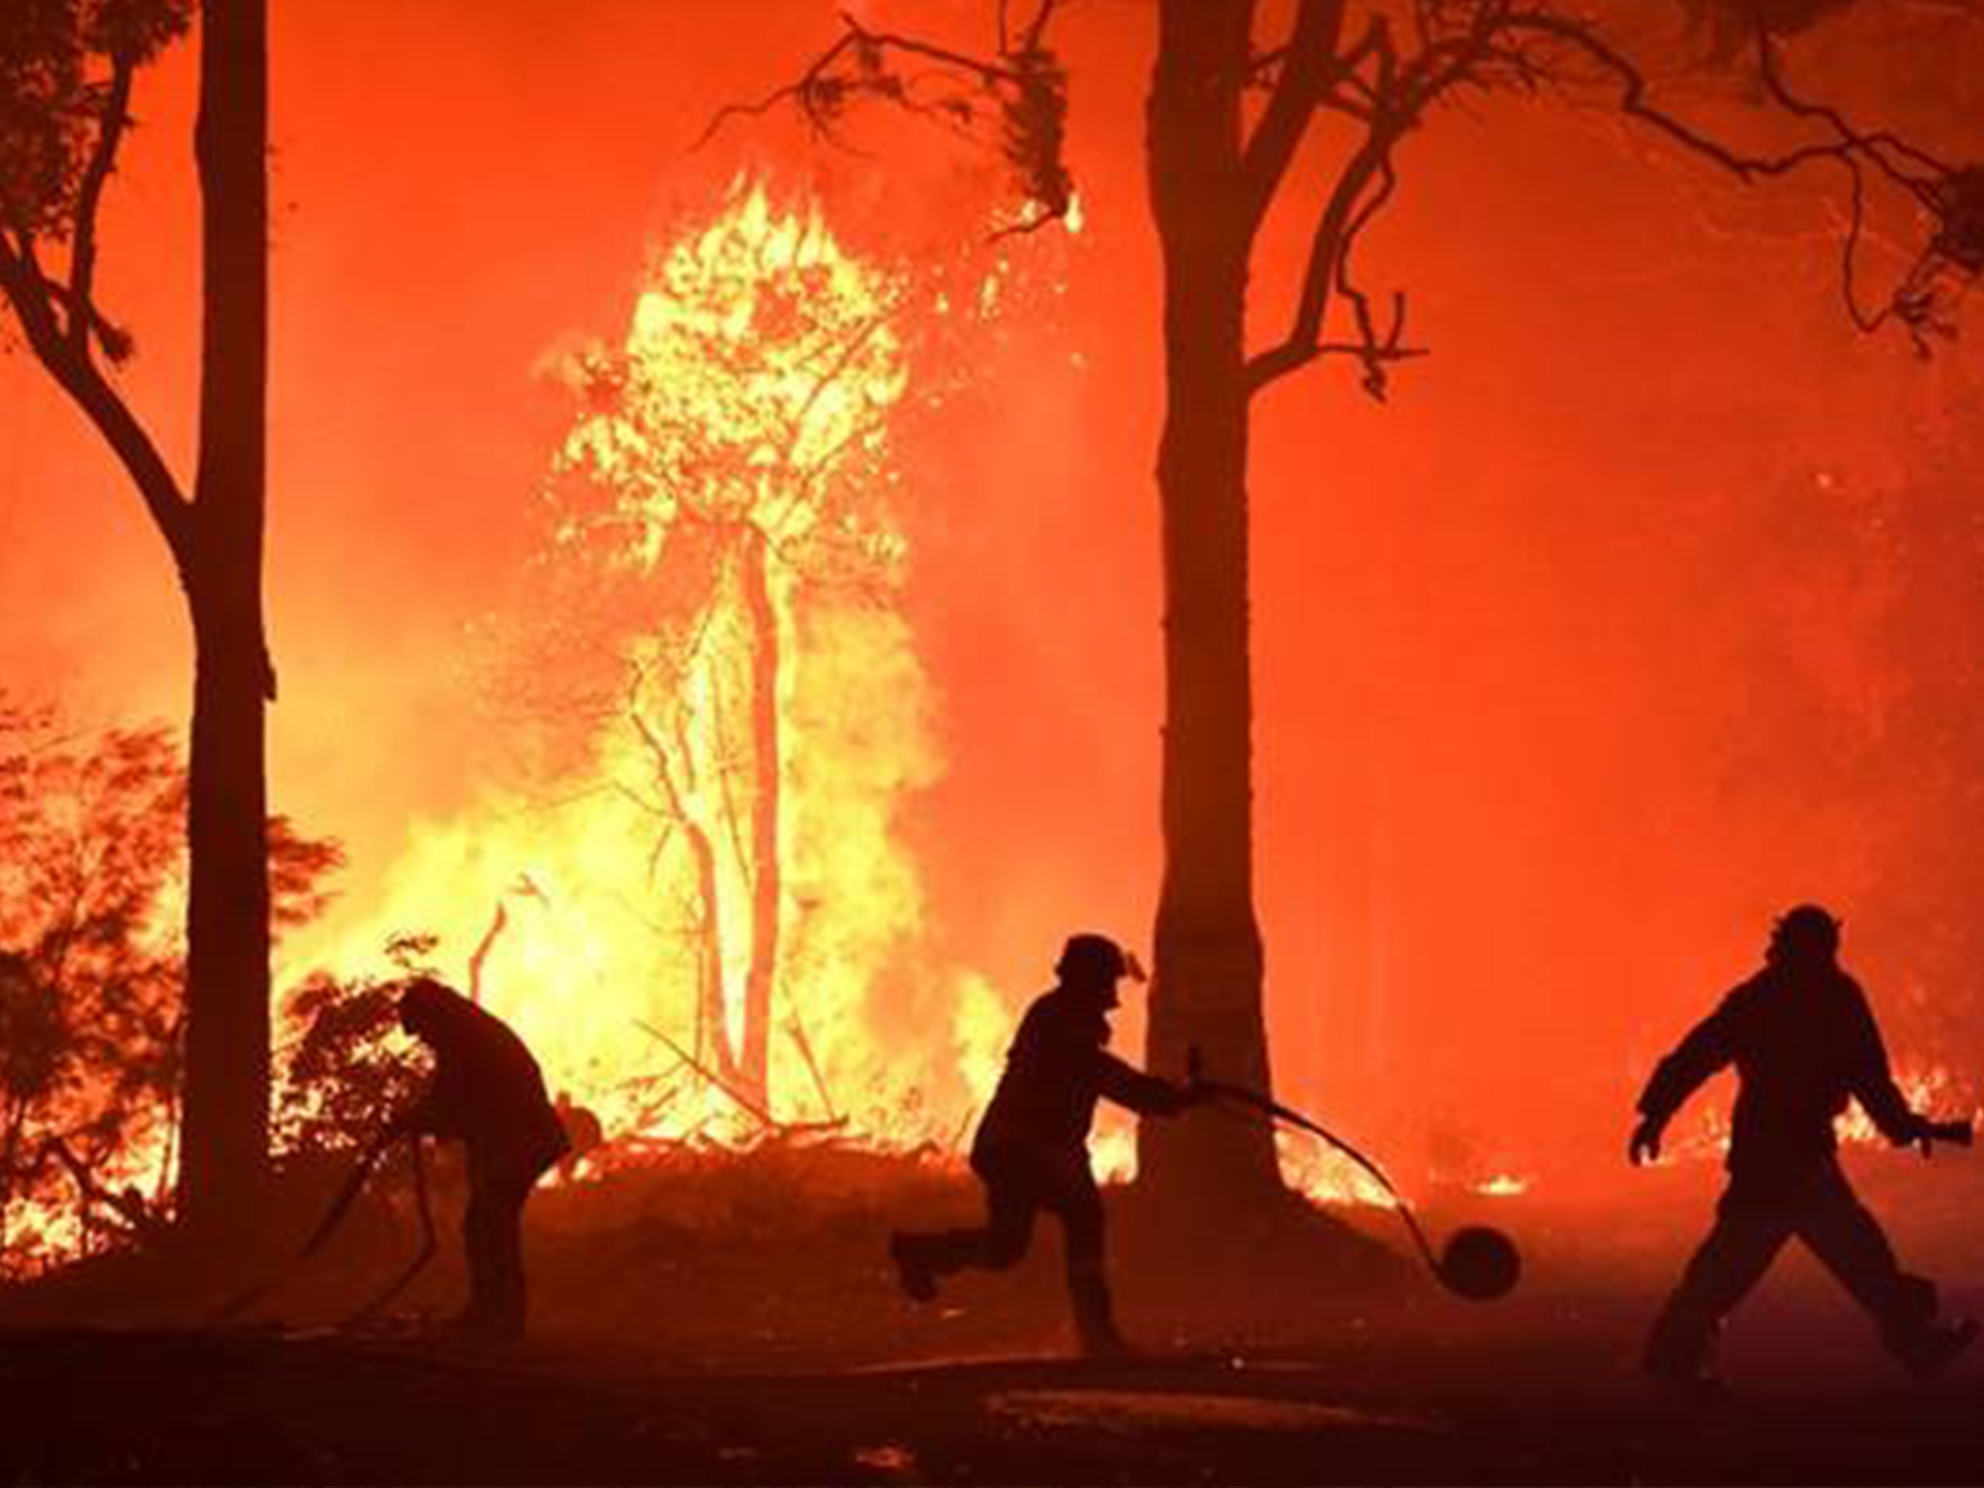 Australian Firefighters battling a blaze. Photo provided by PBS.org.